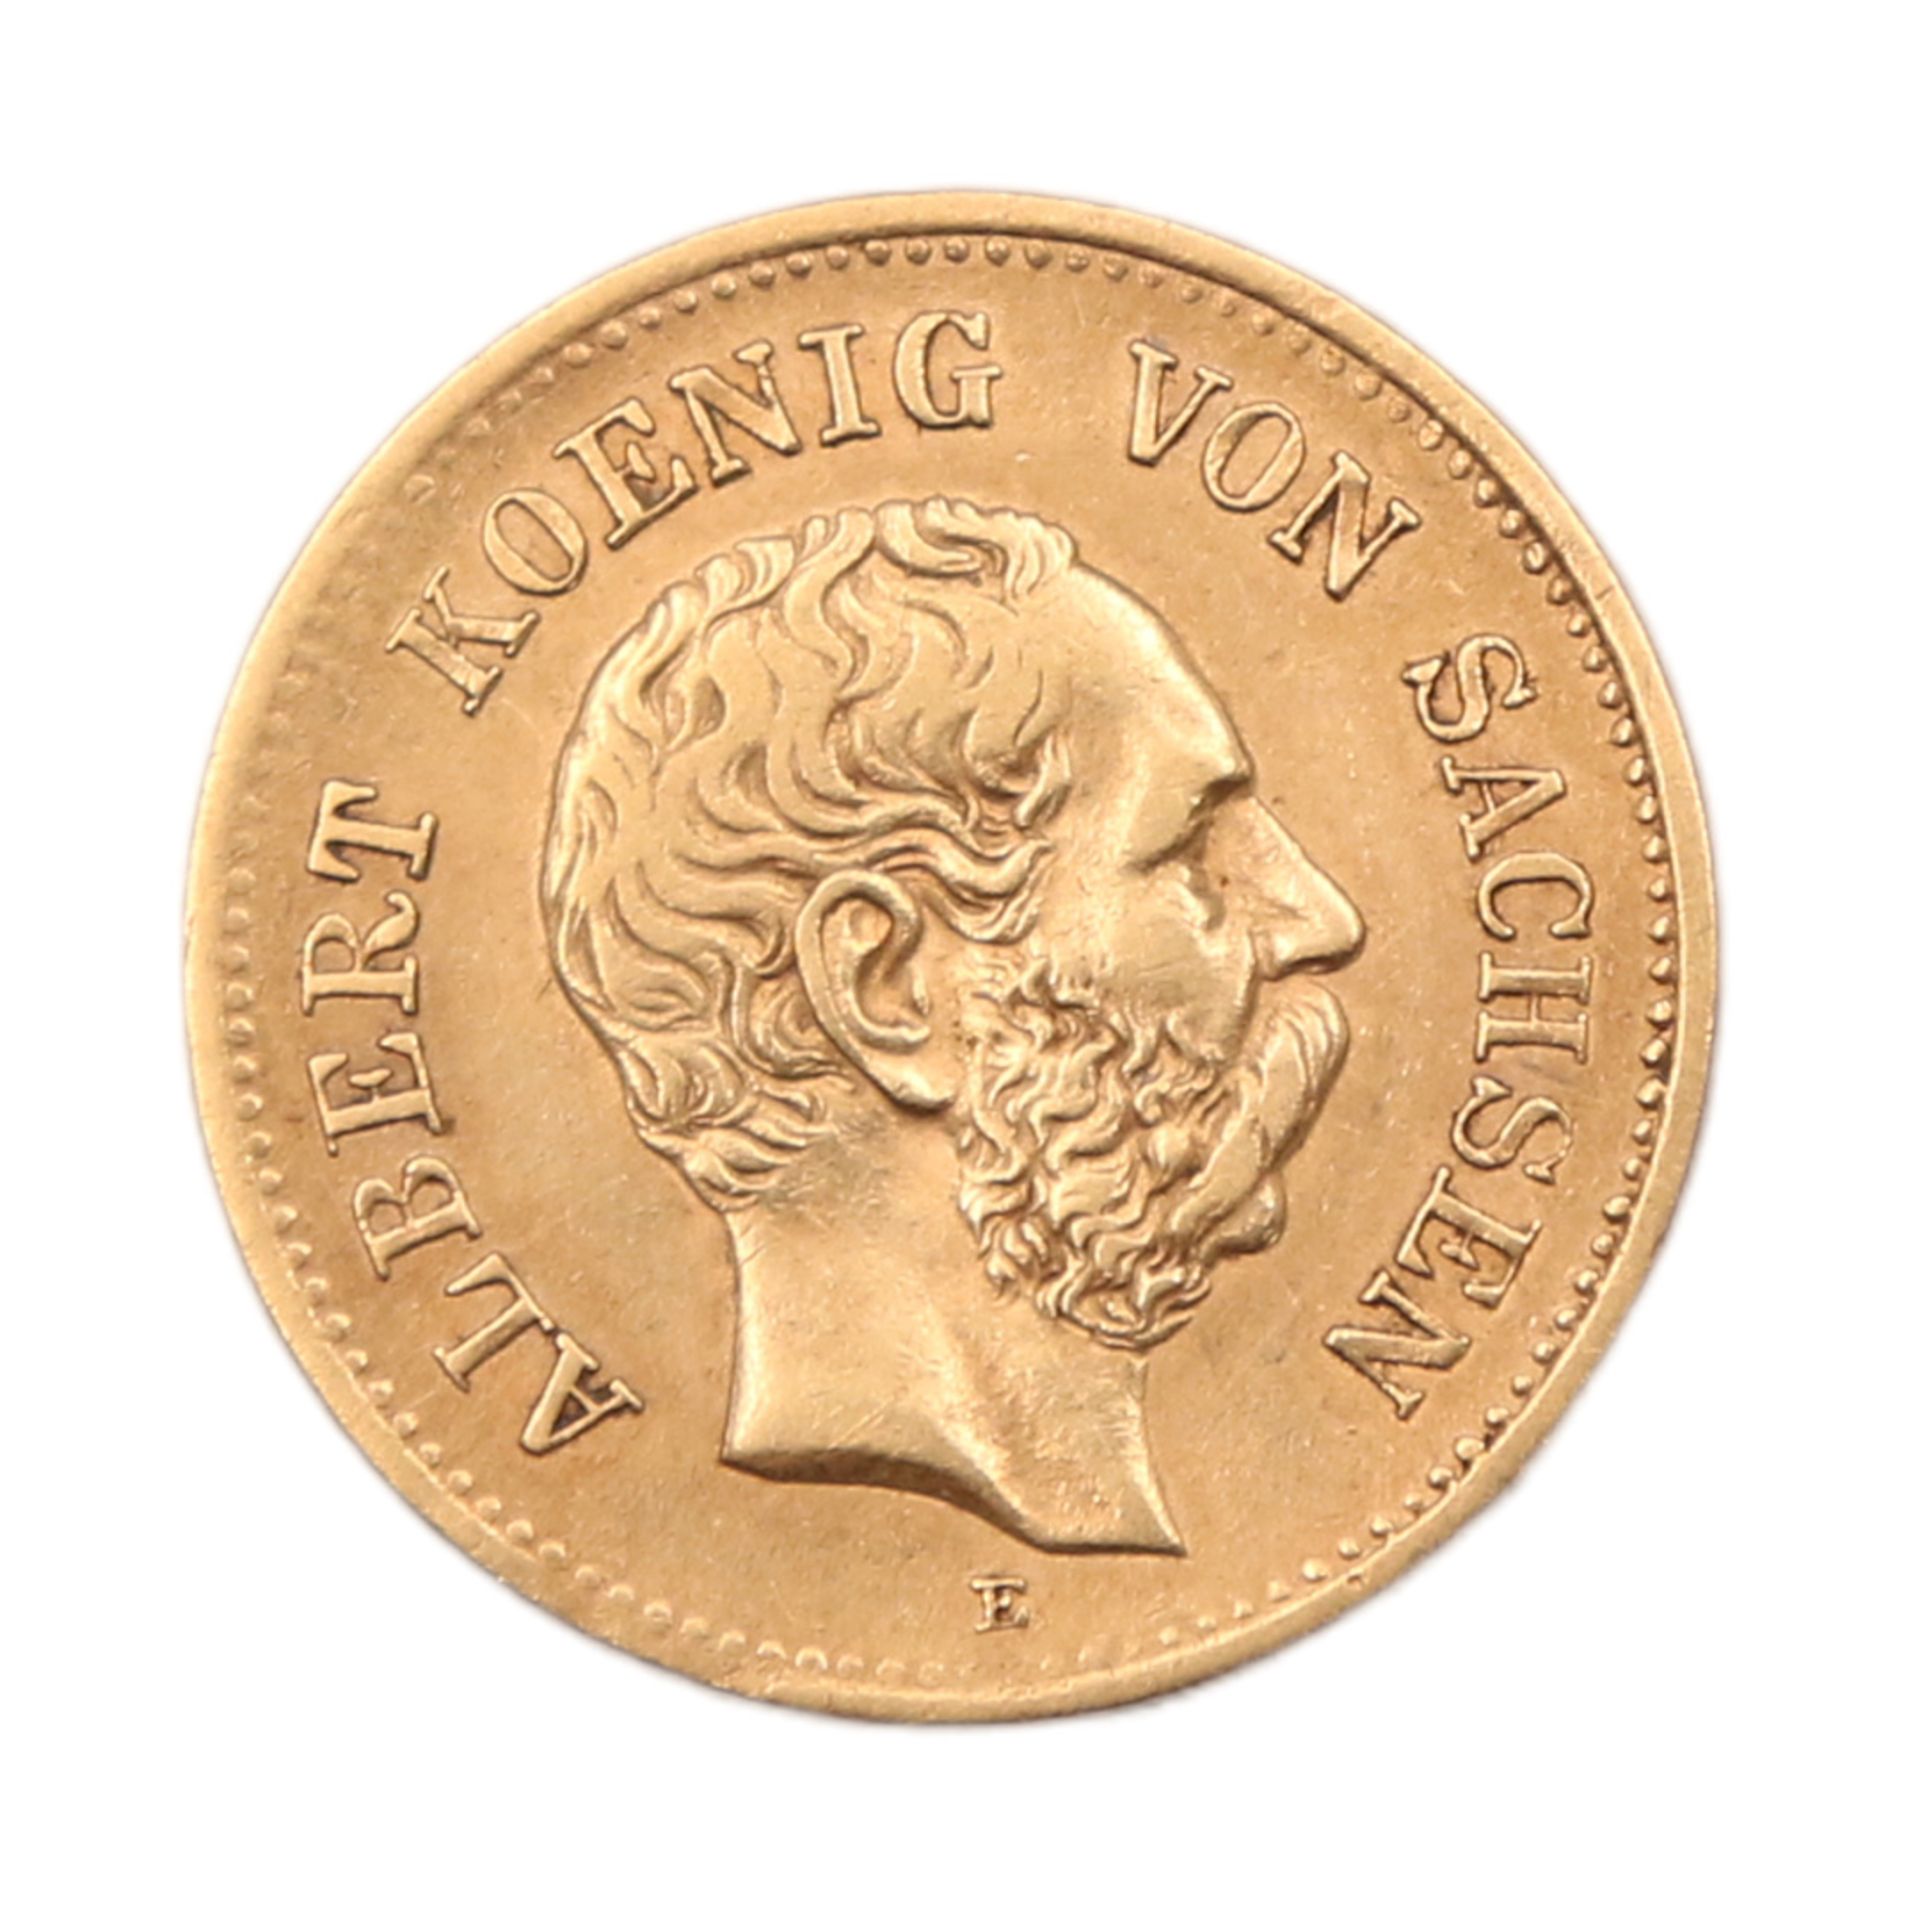 5 Mark Reichsgold coin, Saxony, 1877